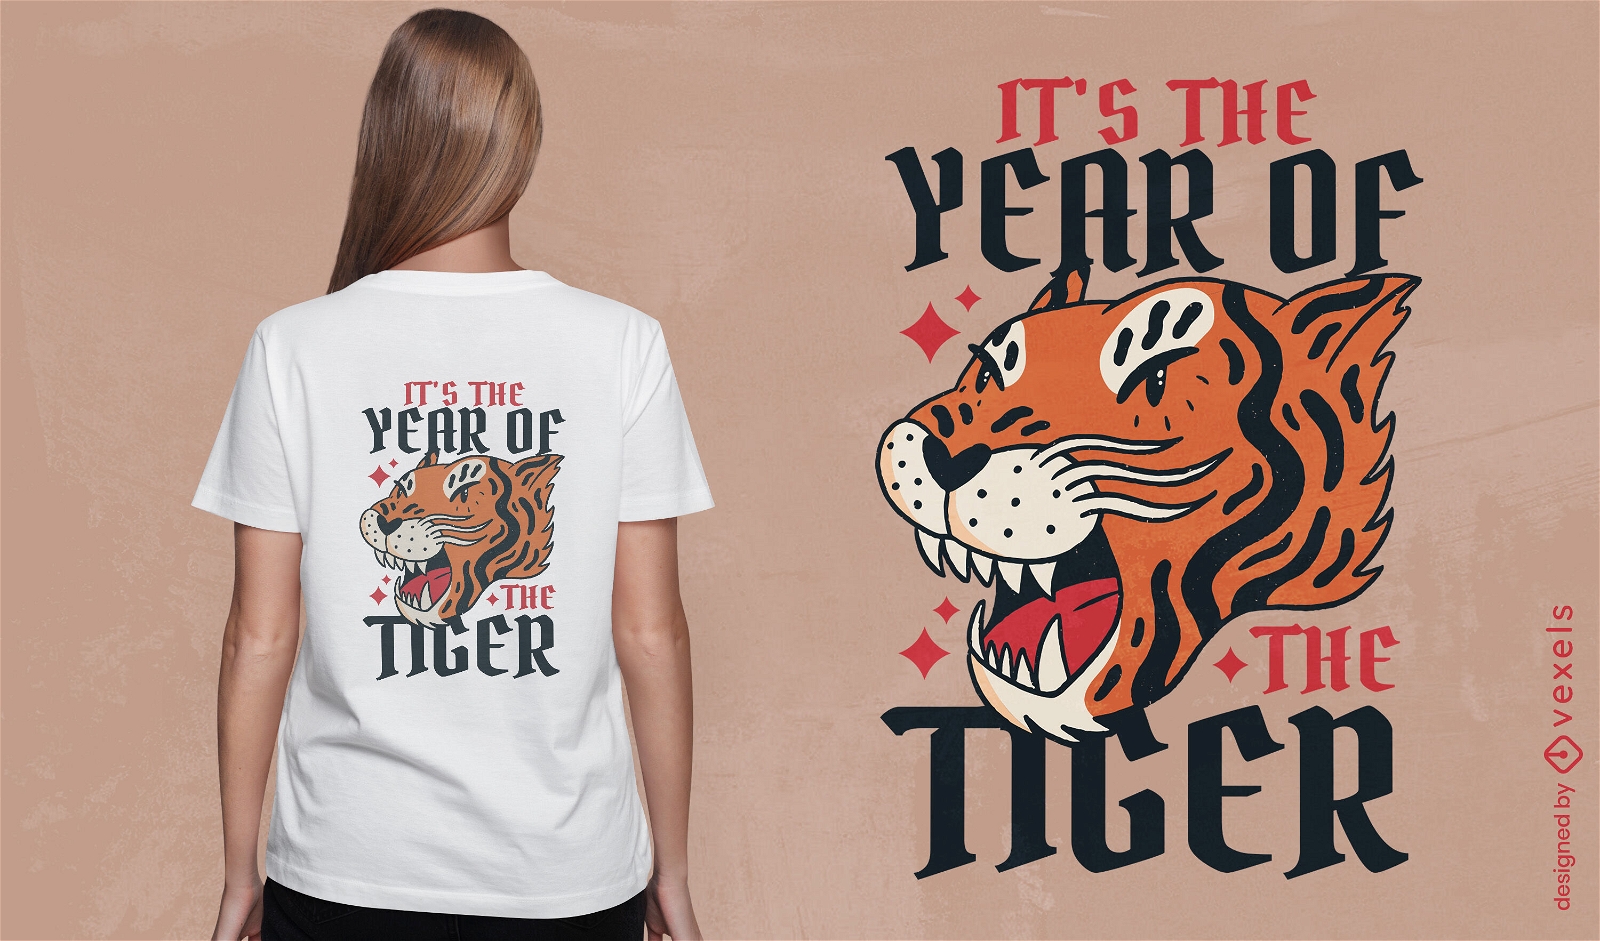 Dise?o de camiseta del a?o del tigre 2022